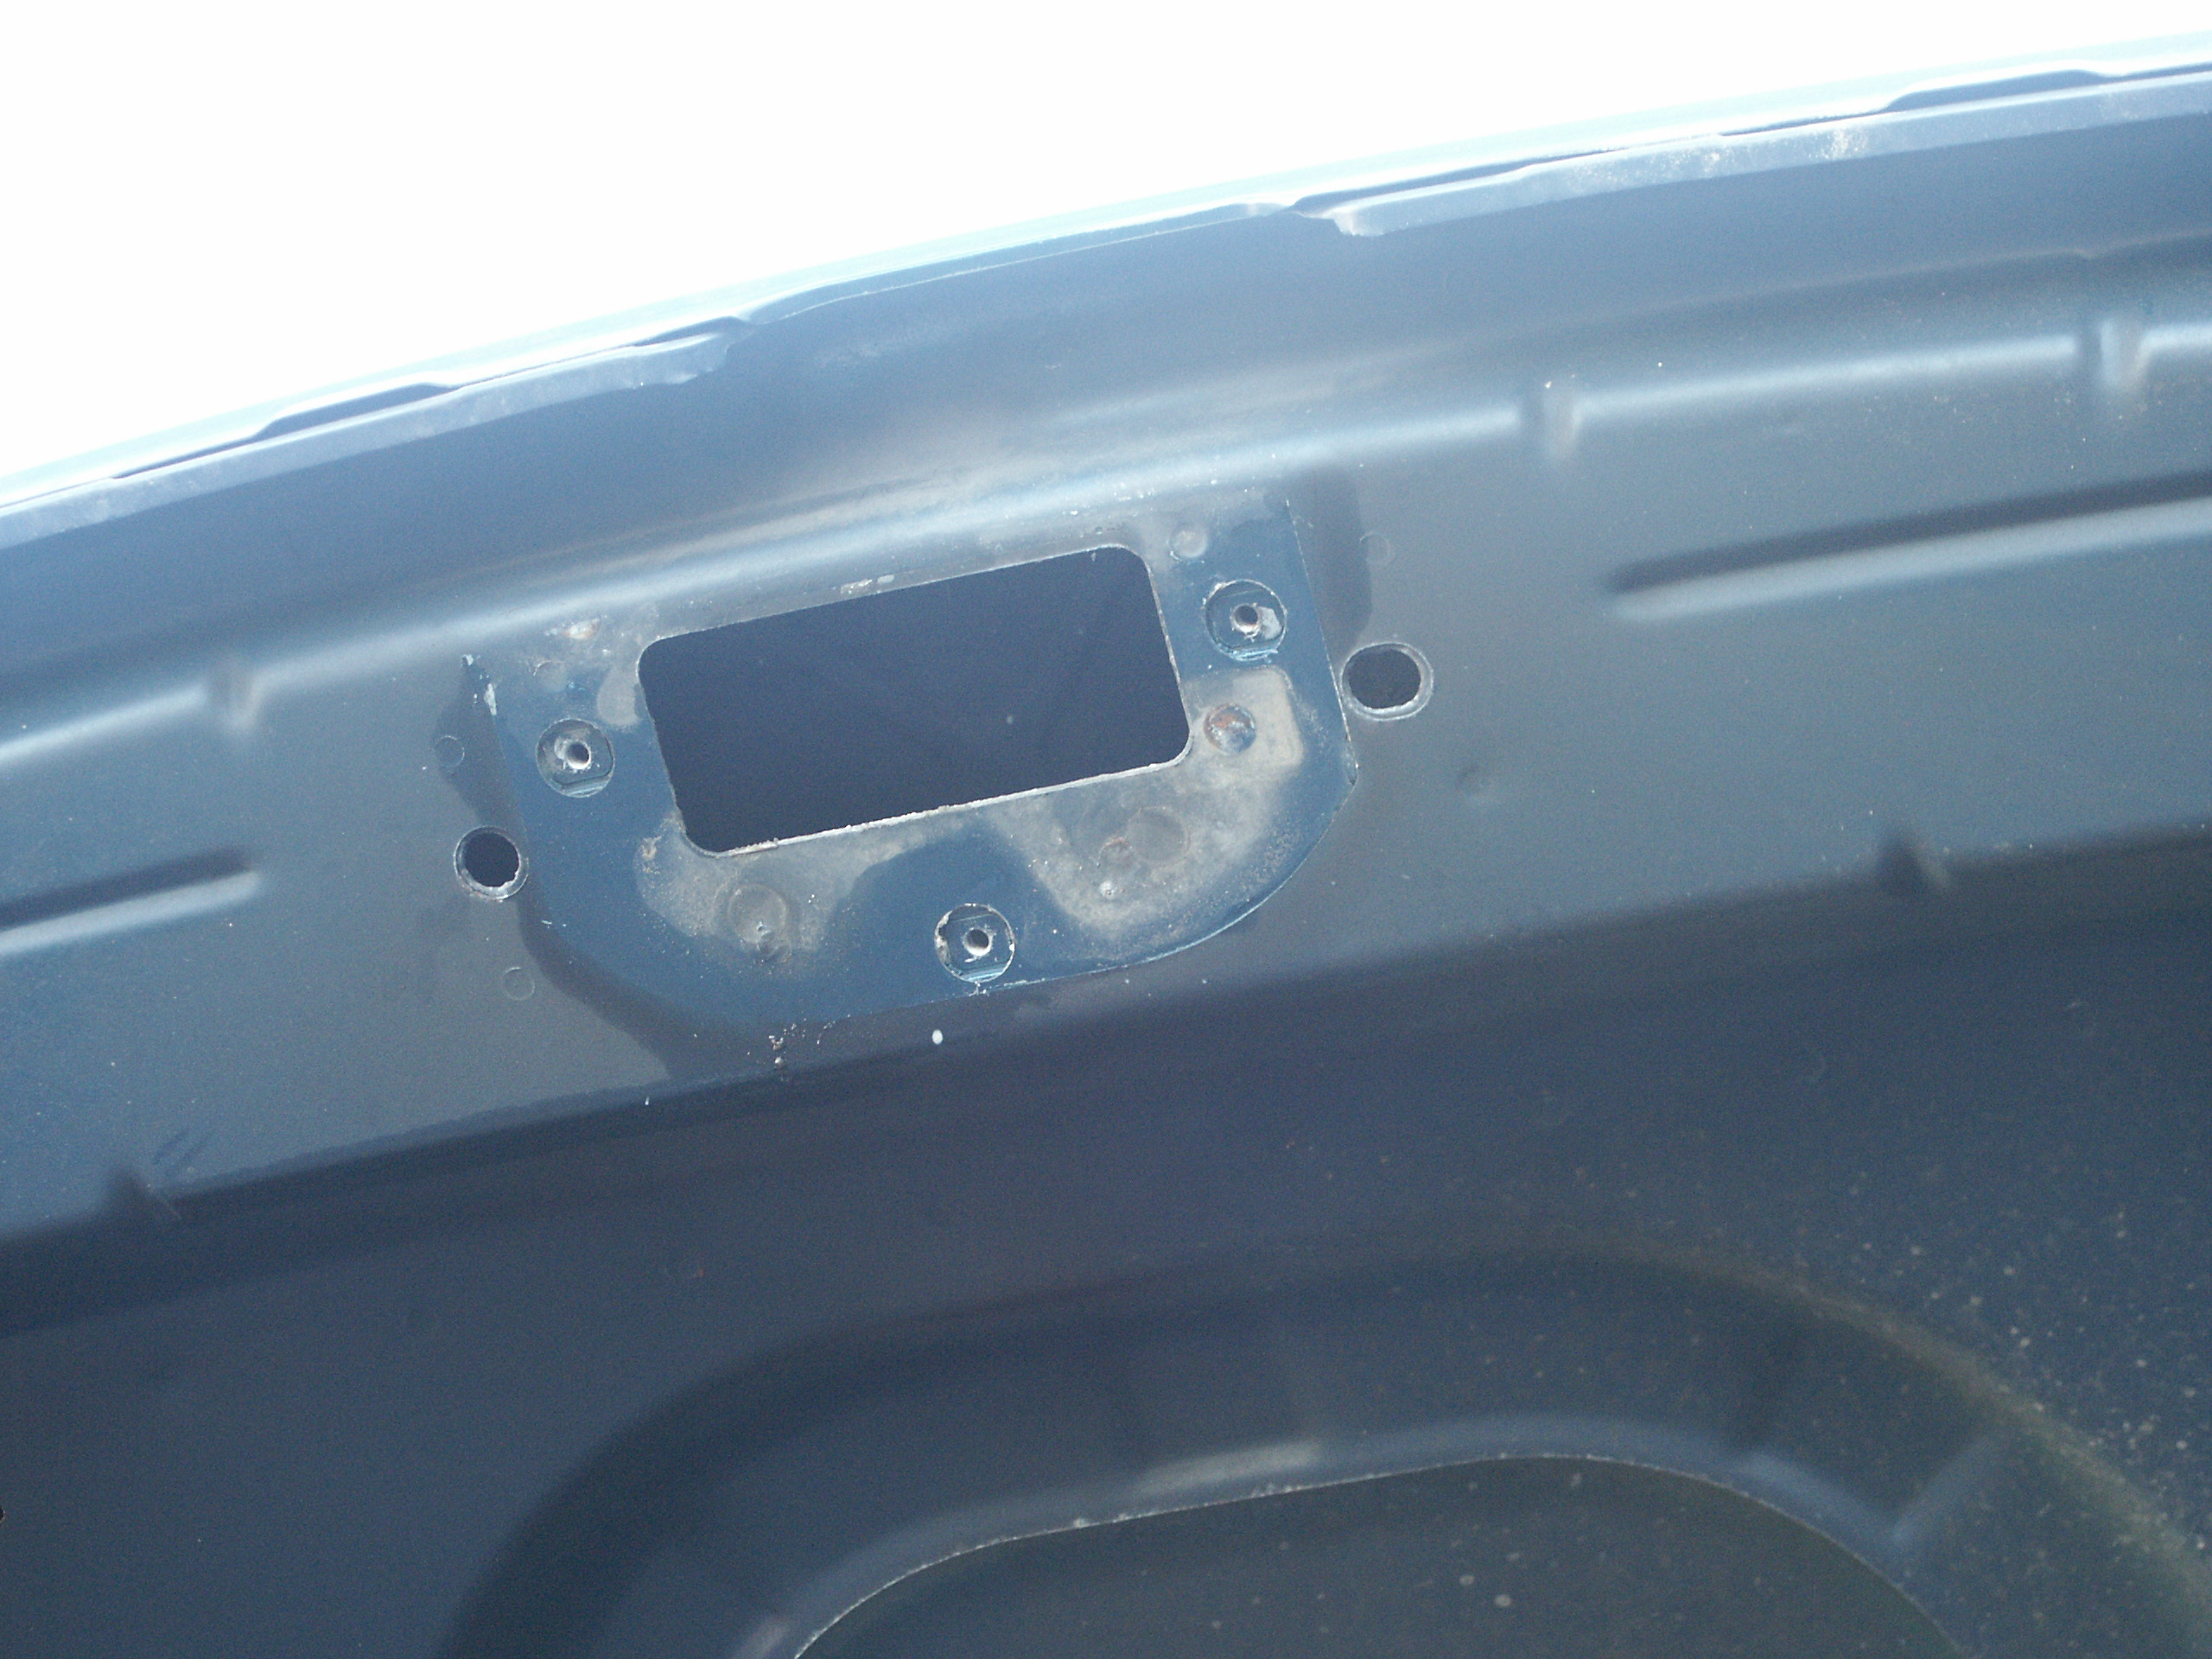 1998 Ford ranger hood latch repair #3